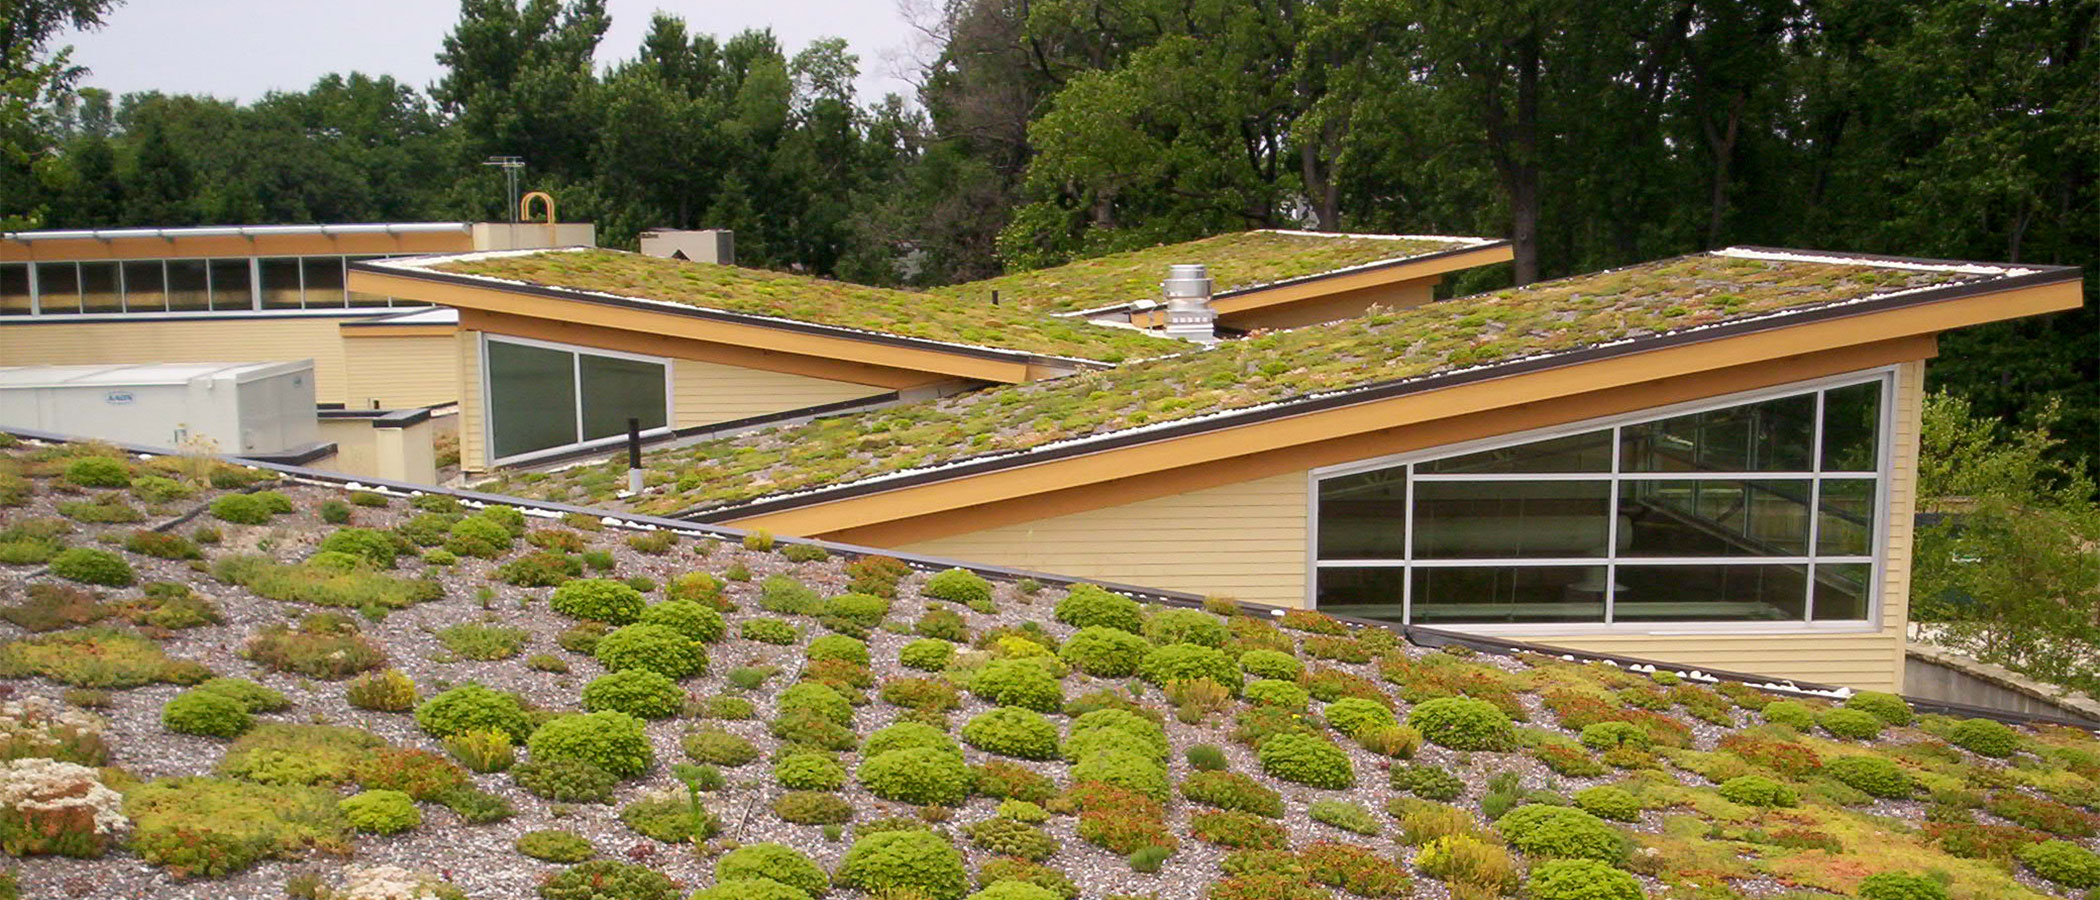 Green roof at Arlington's Walter Reed Community Center.